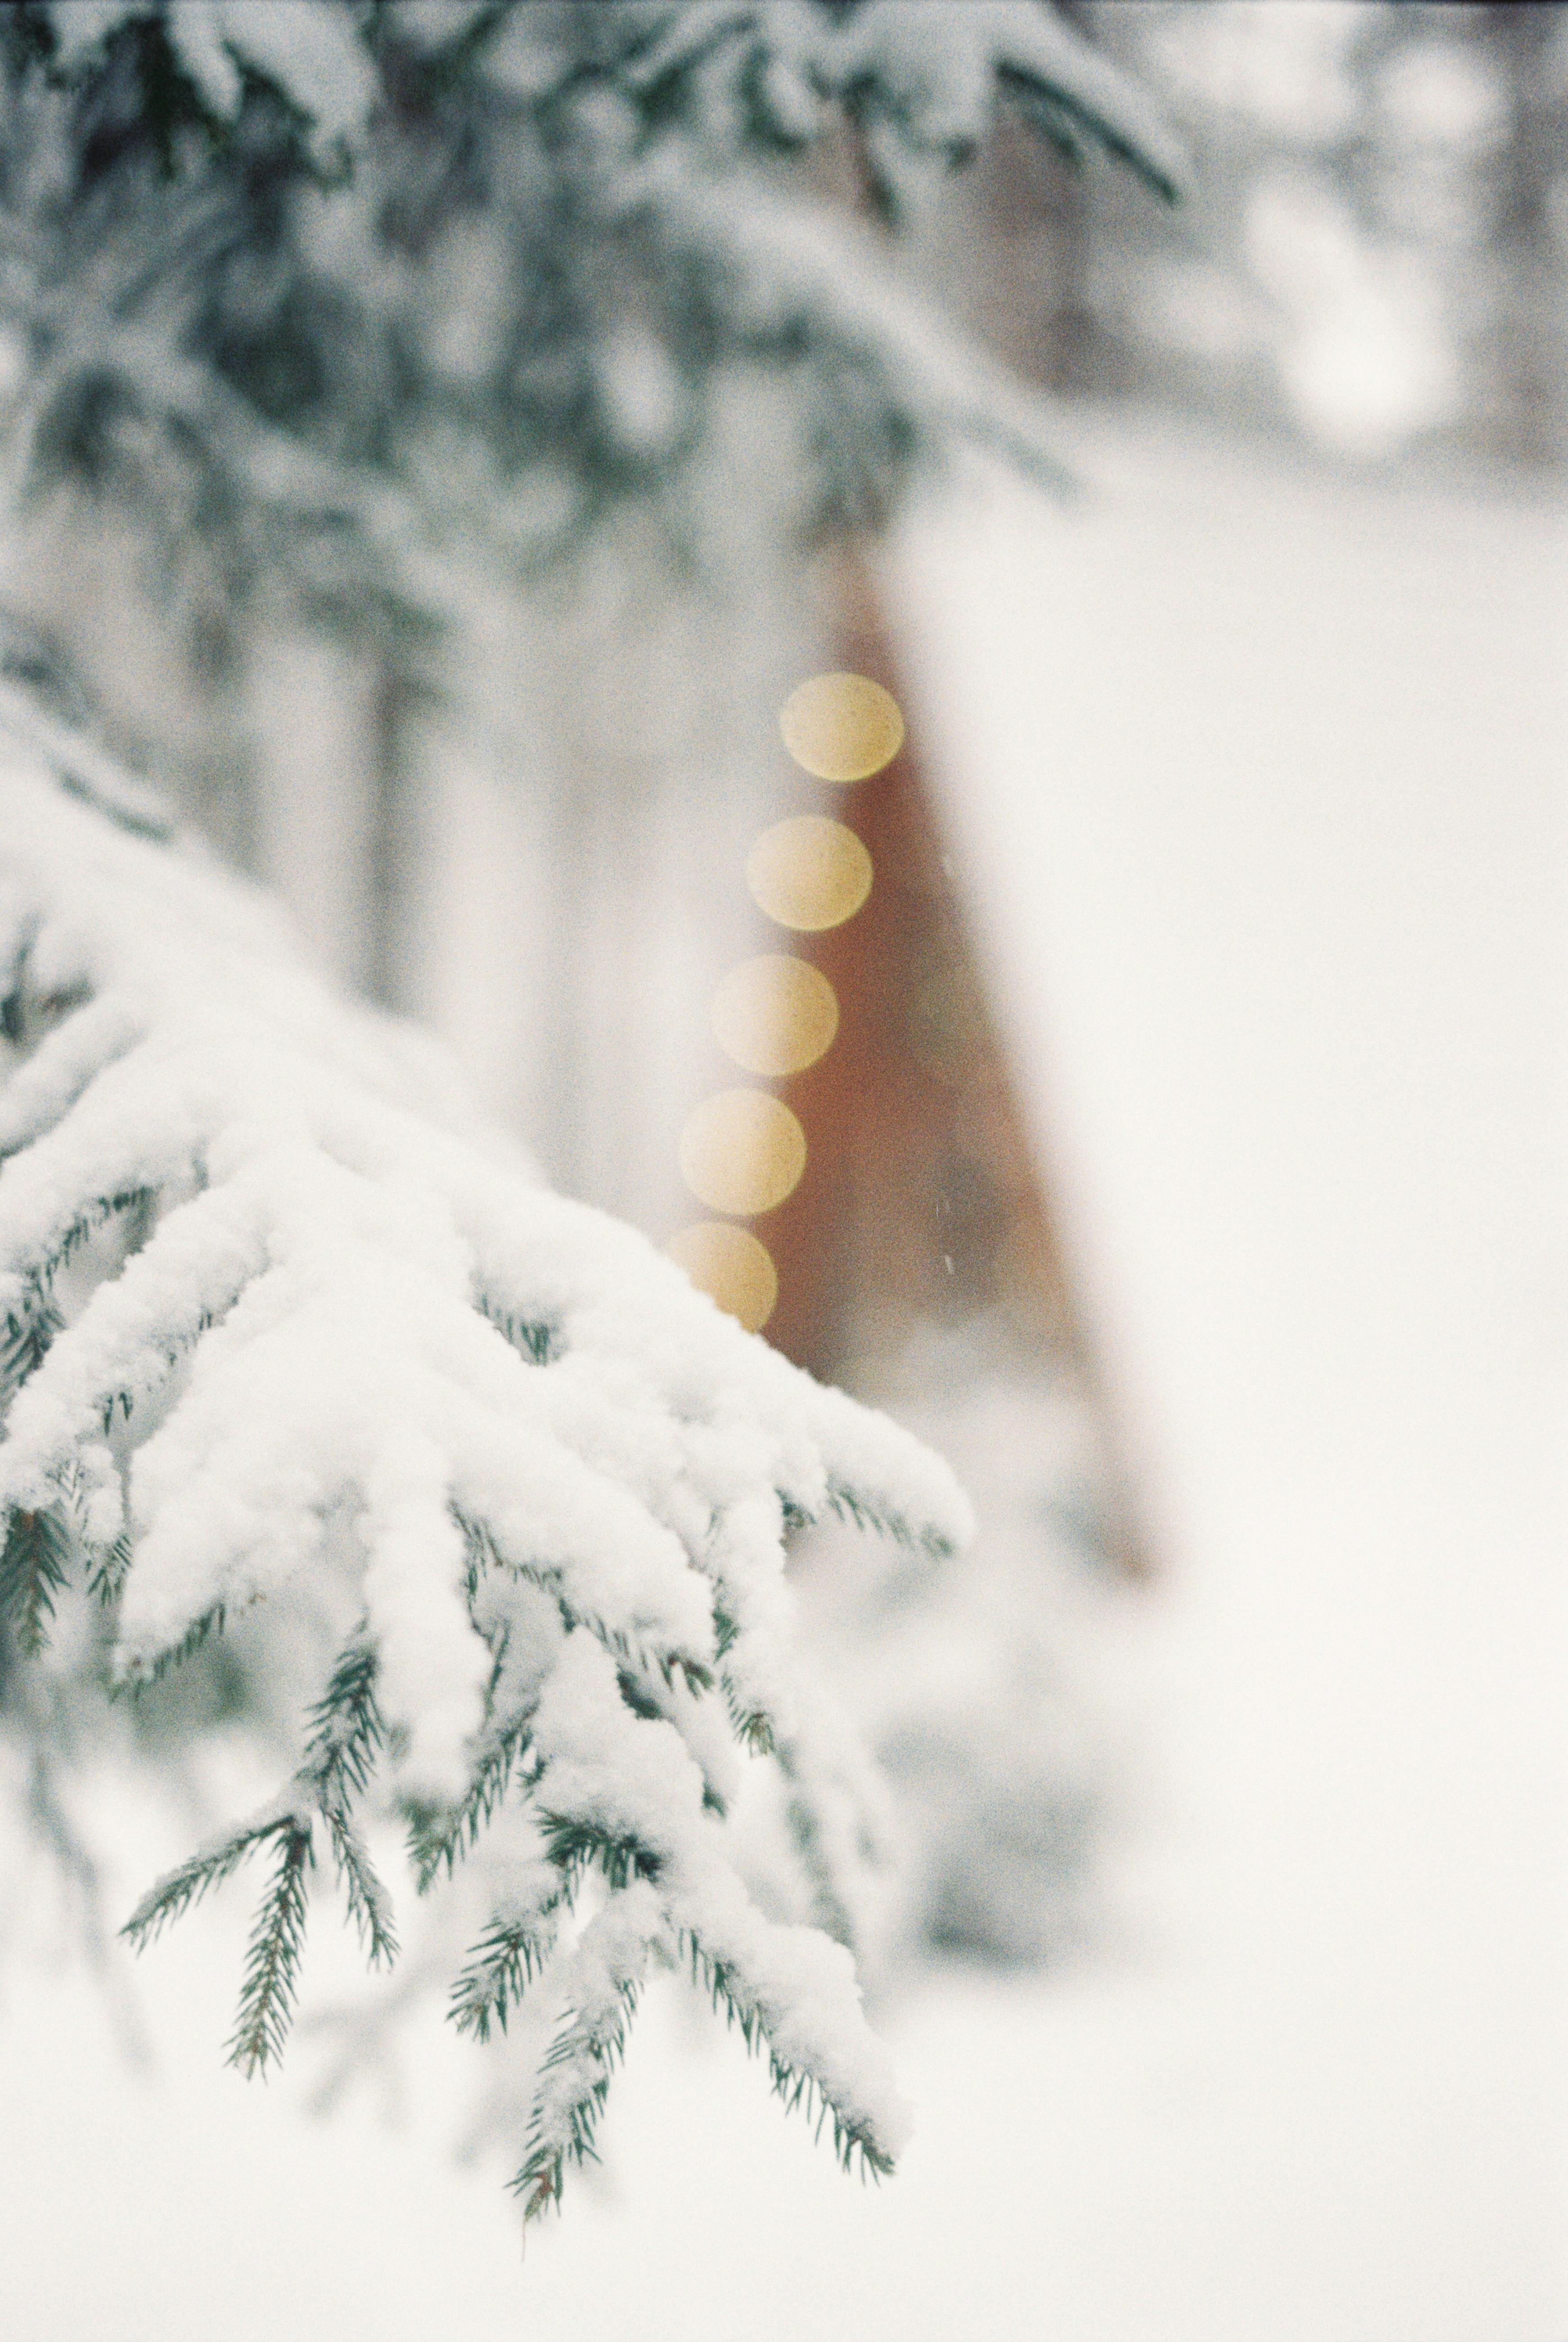 50 Beautiful Winter Wallpapers For Your Desktop Vol 2  Hongkiat